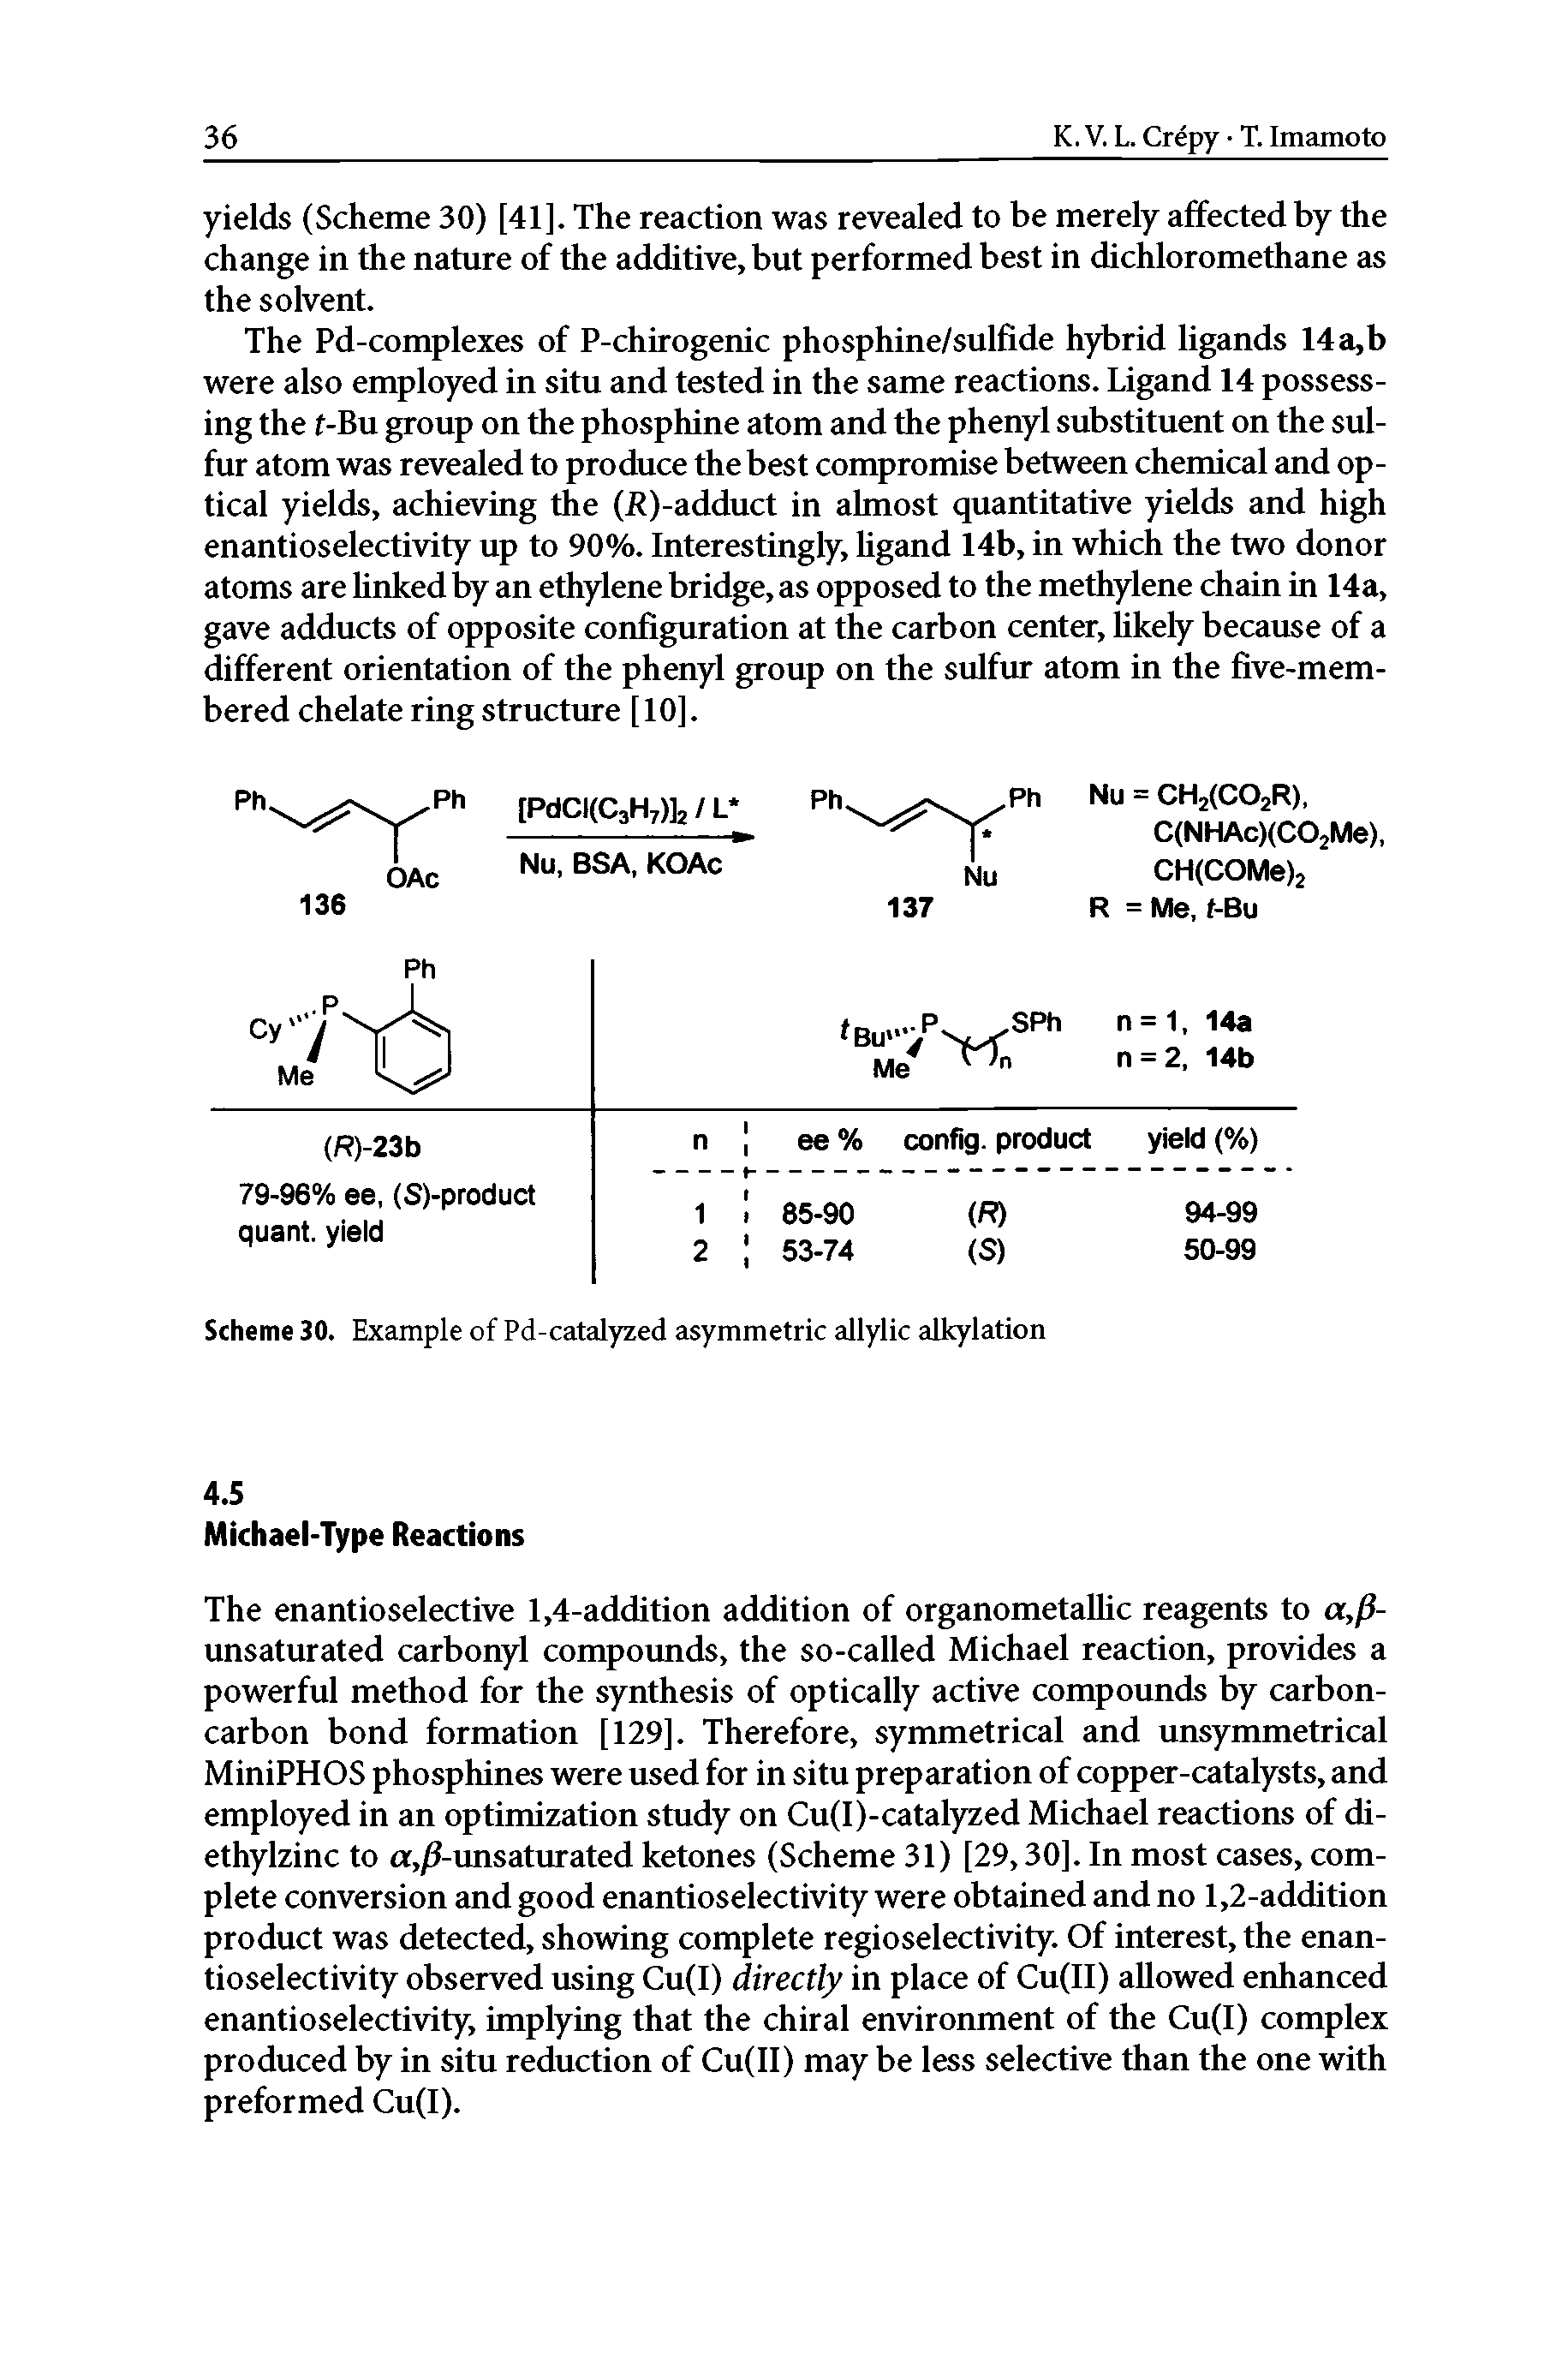 Scheme 30. Example of Pd-catalyzed asymmetric allylic alkylation...